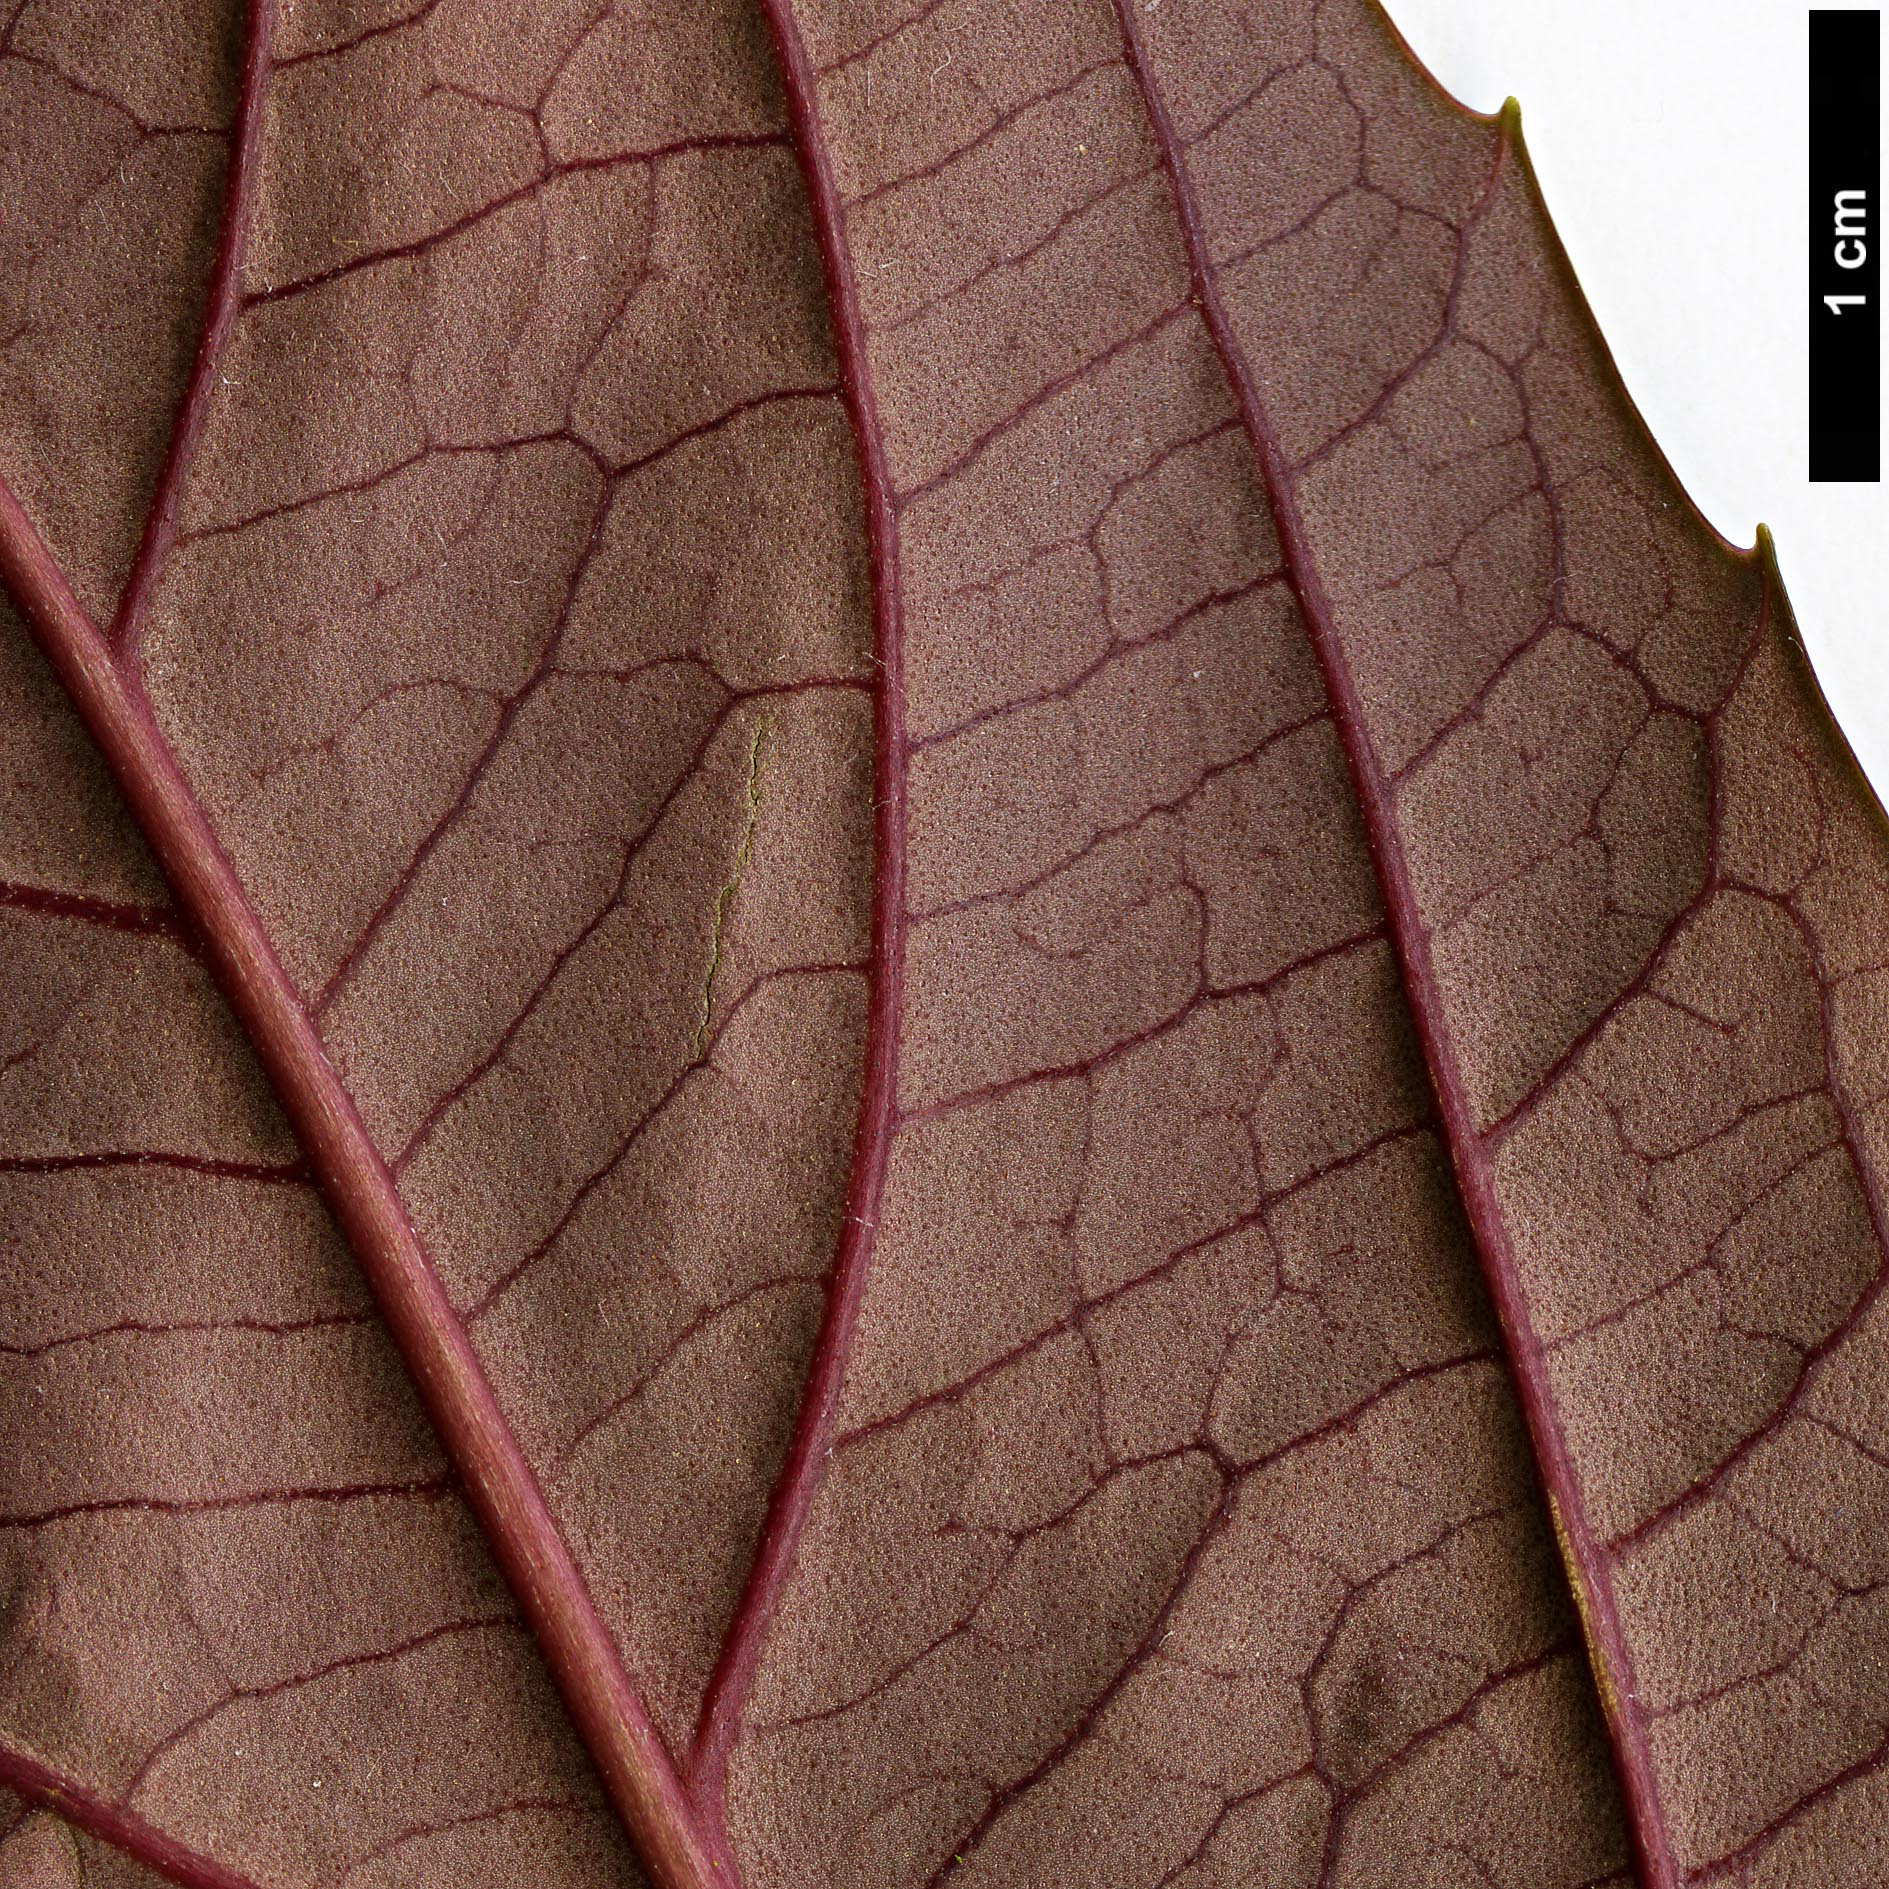 High resolution image: Family: Adoxaceae - Genus: Viburnum - Taxon: WWJ 12012